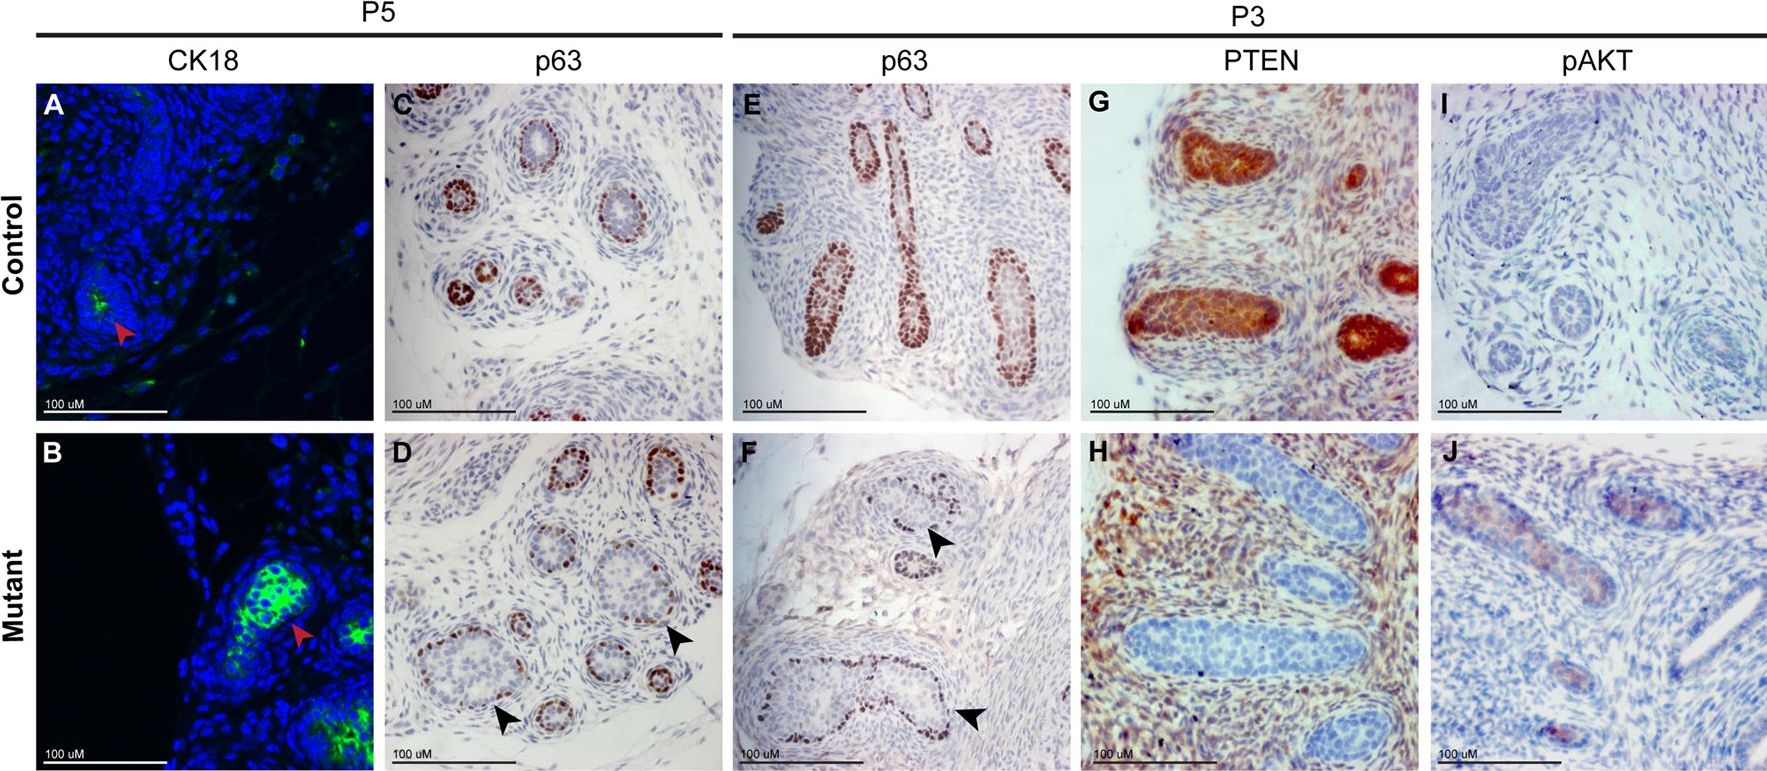 Pten Regulates Epithelial Cytodifferentiation during Prostate Development.